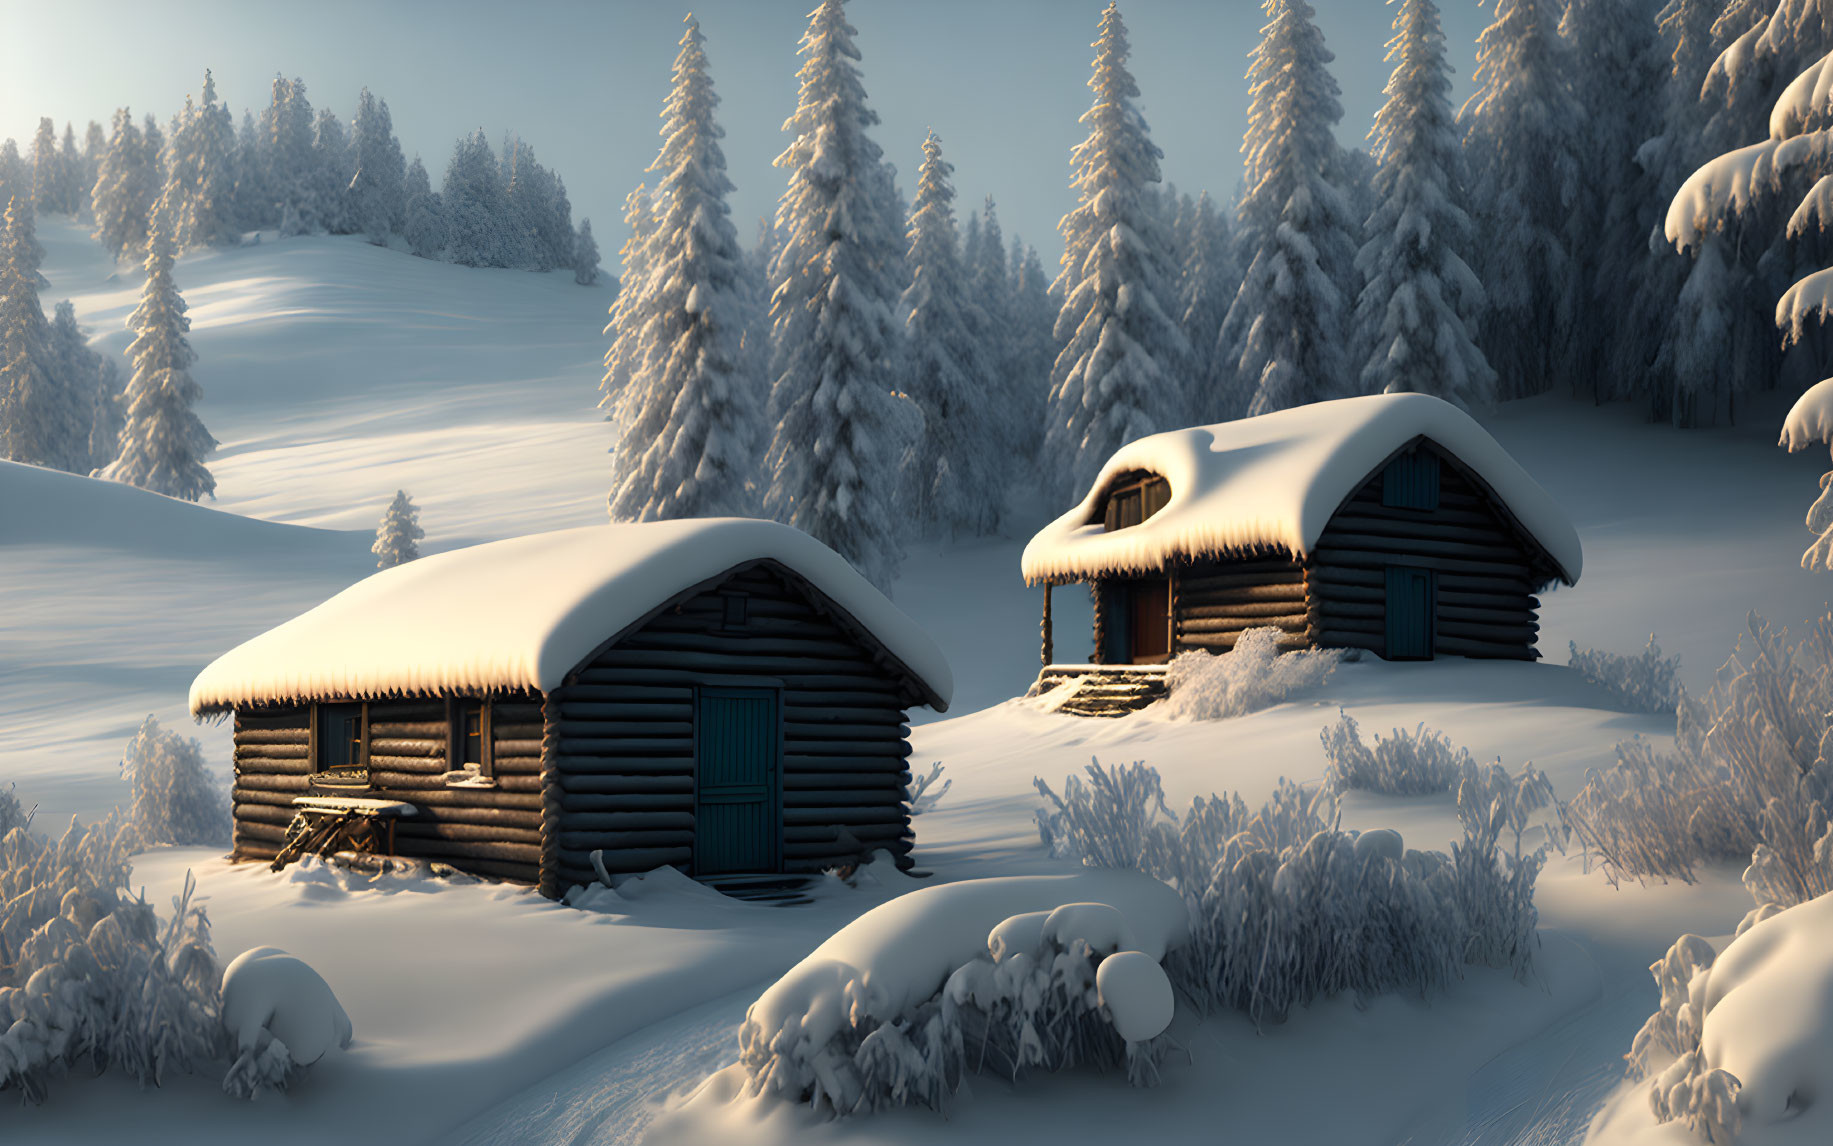 Snow-covered log cabins in serene winter landscape.